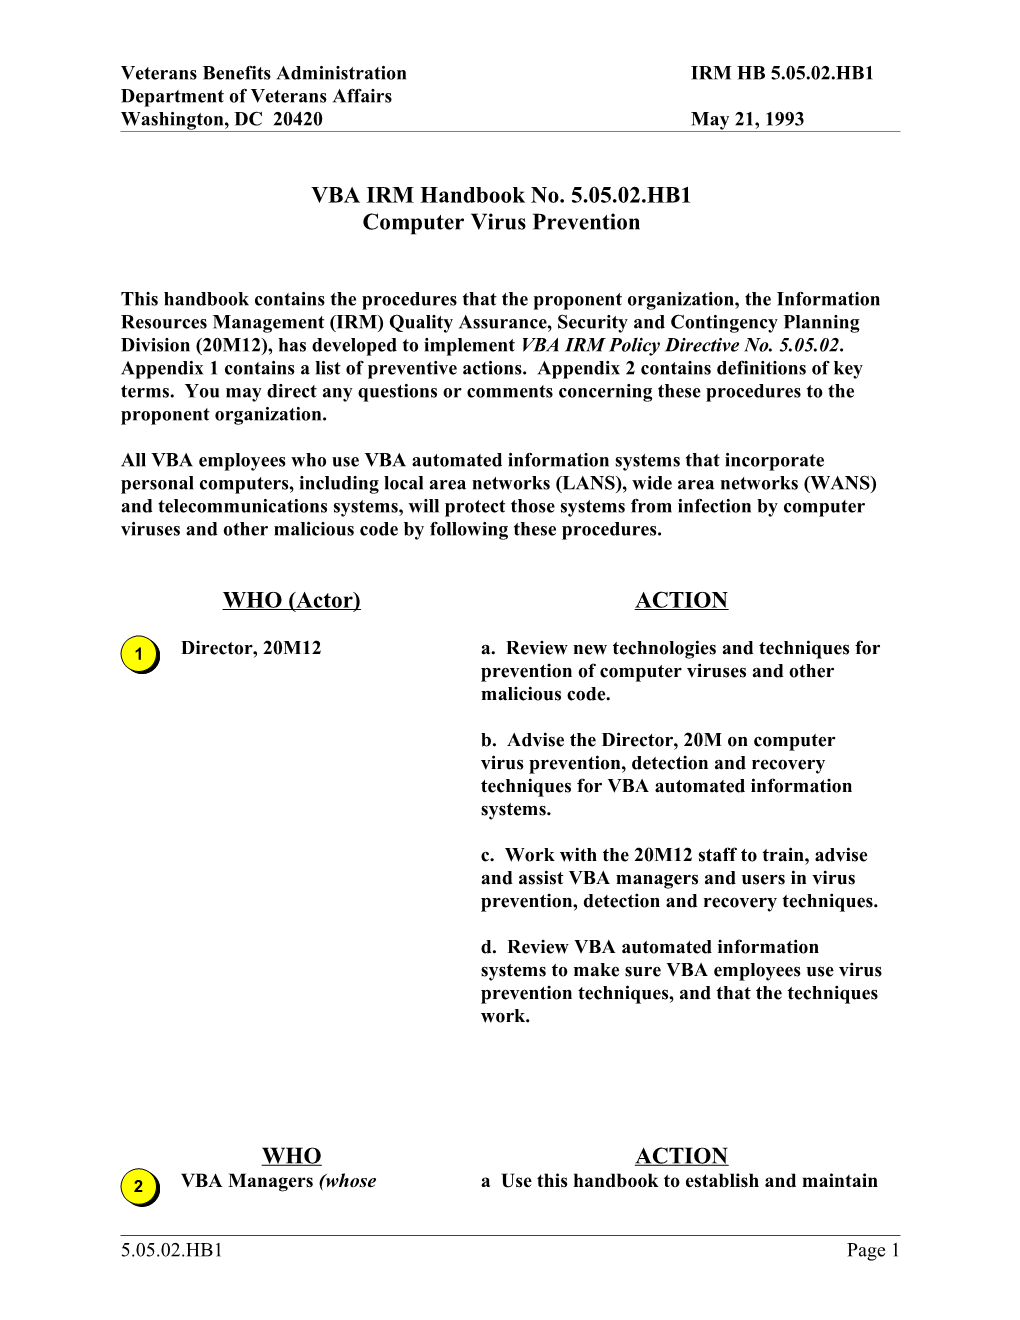 VBA IRM Handbook No. 5.05.02.HB1